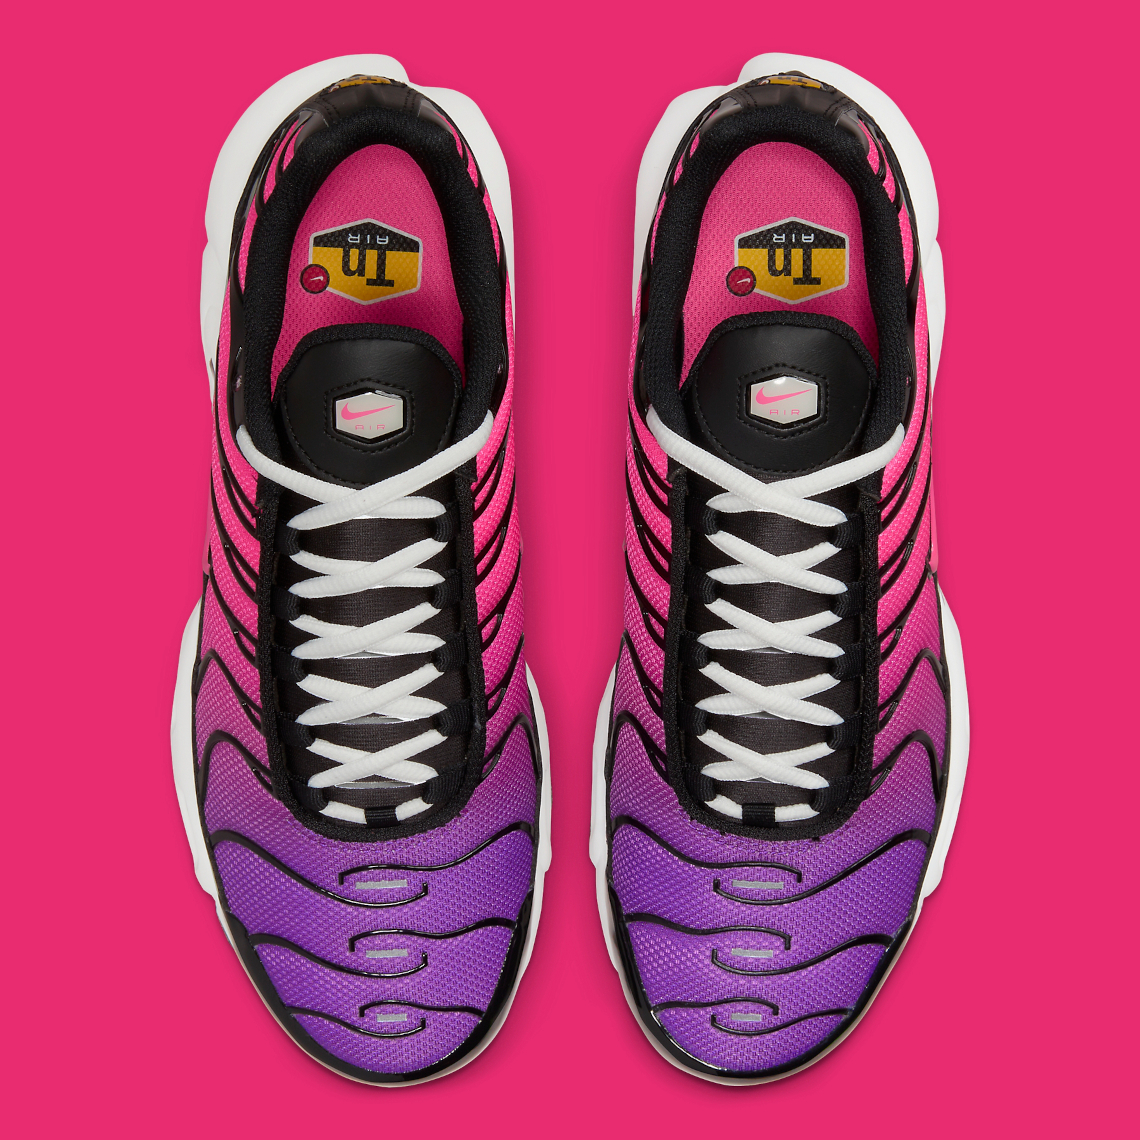 Nike Nike Downshifter 7 Black Pink Marathon Running Shoes Sneakers 852466-008 Dz3670 500 4